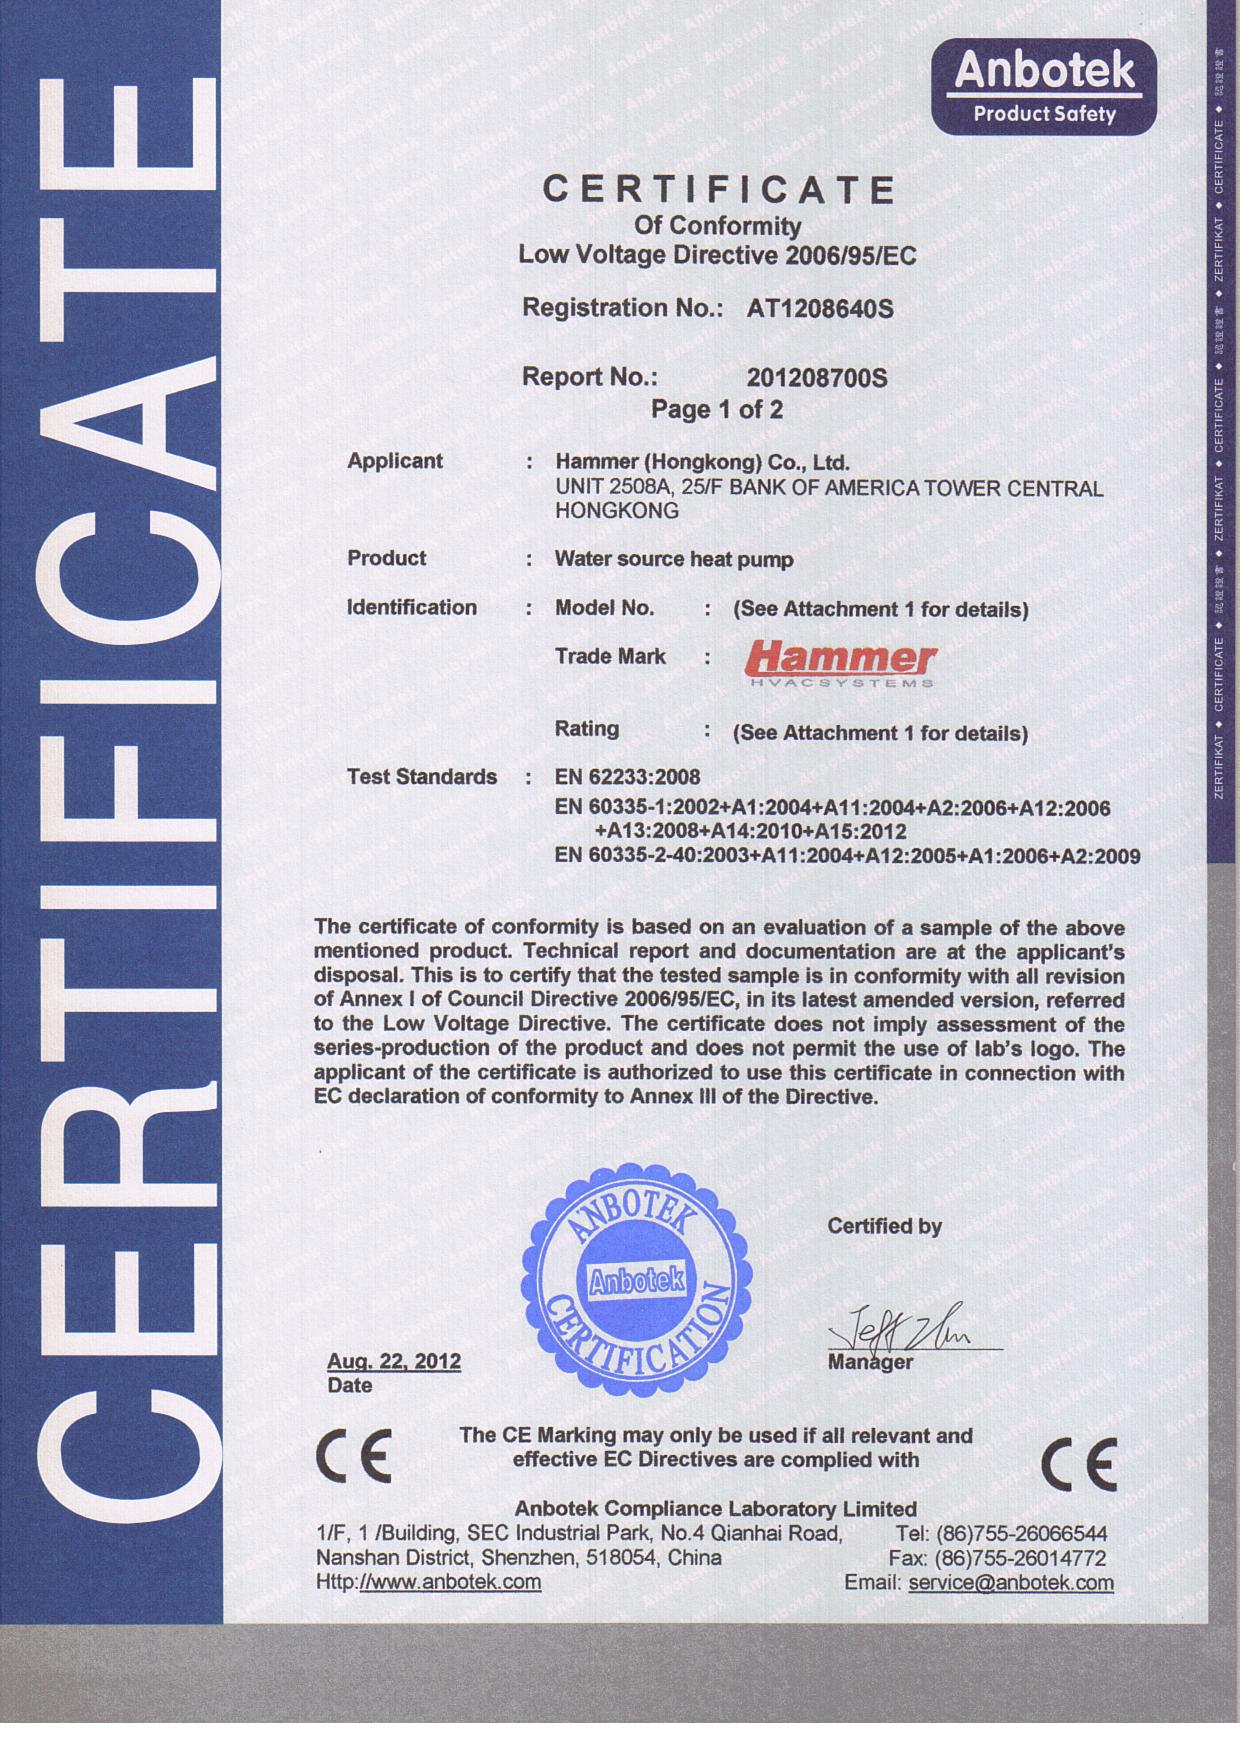 Water source heat pump CE Certificate (LVD-1)